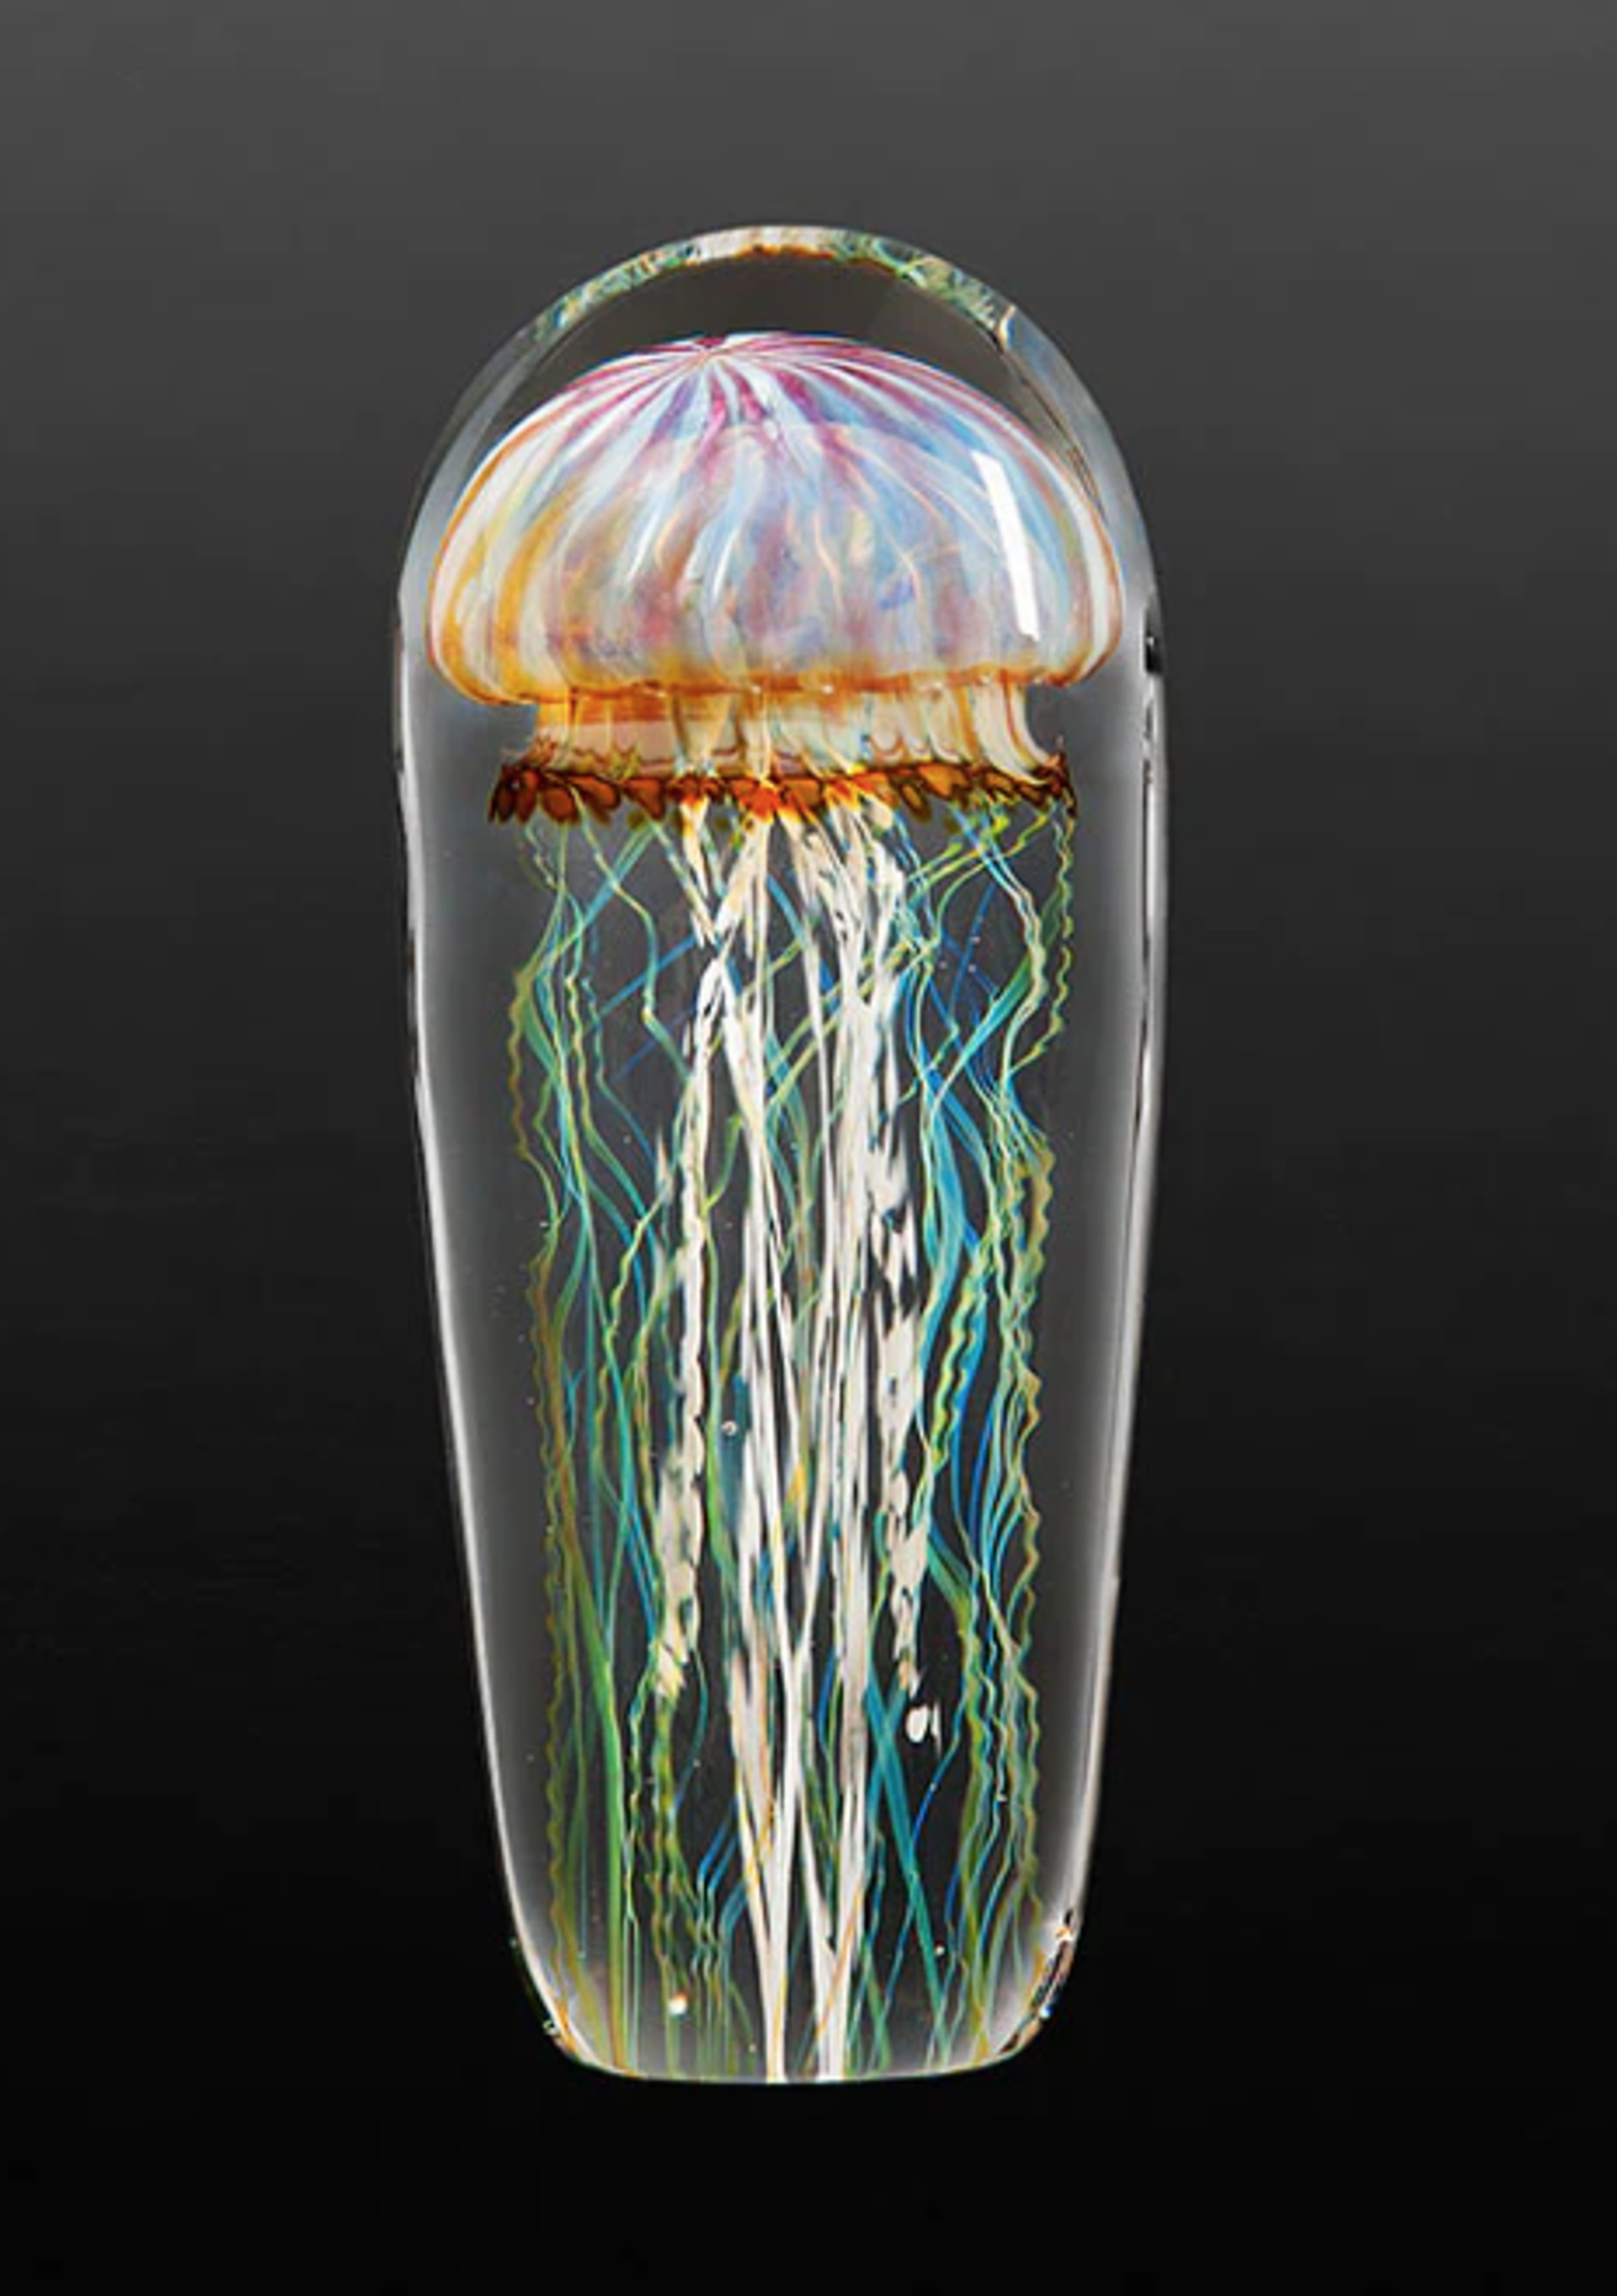 Passion Moon Jellyfish by RICHARD SATAVA